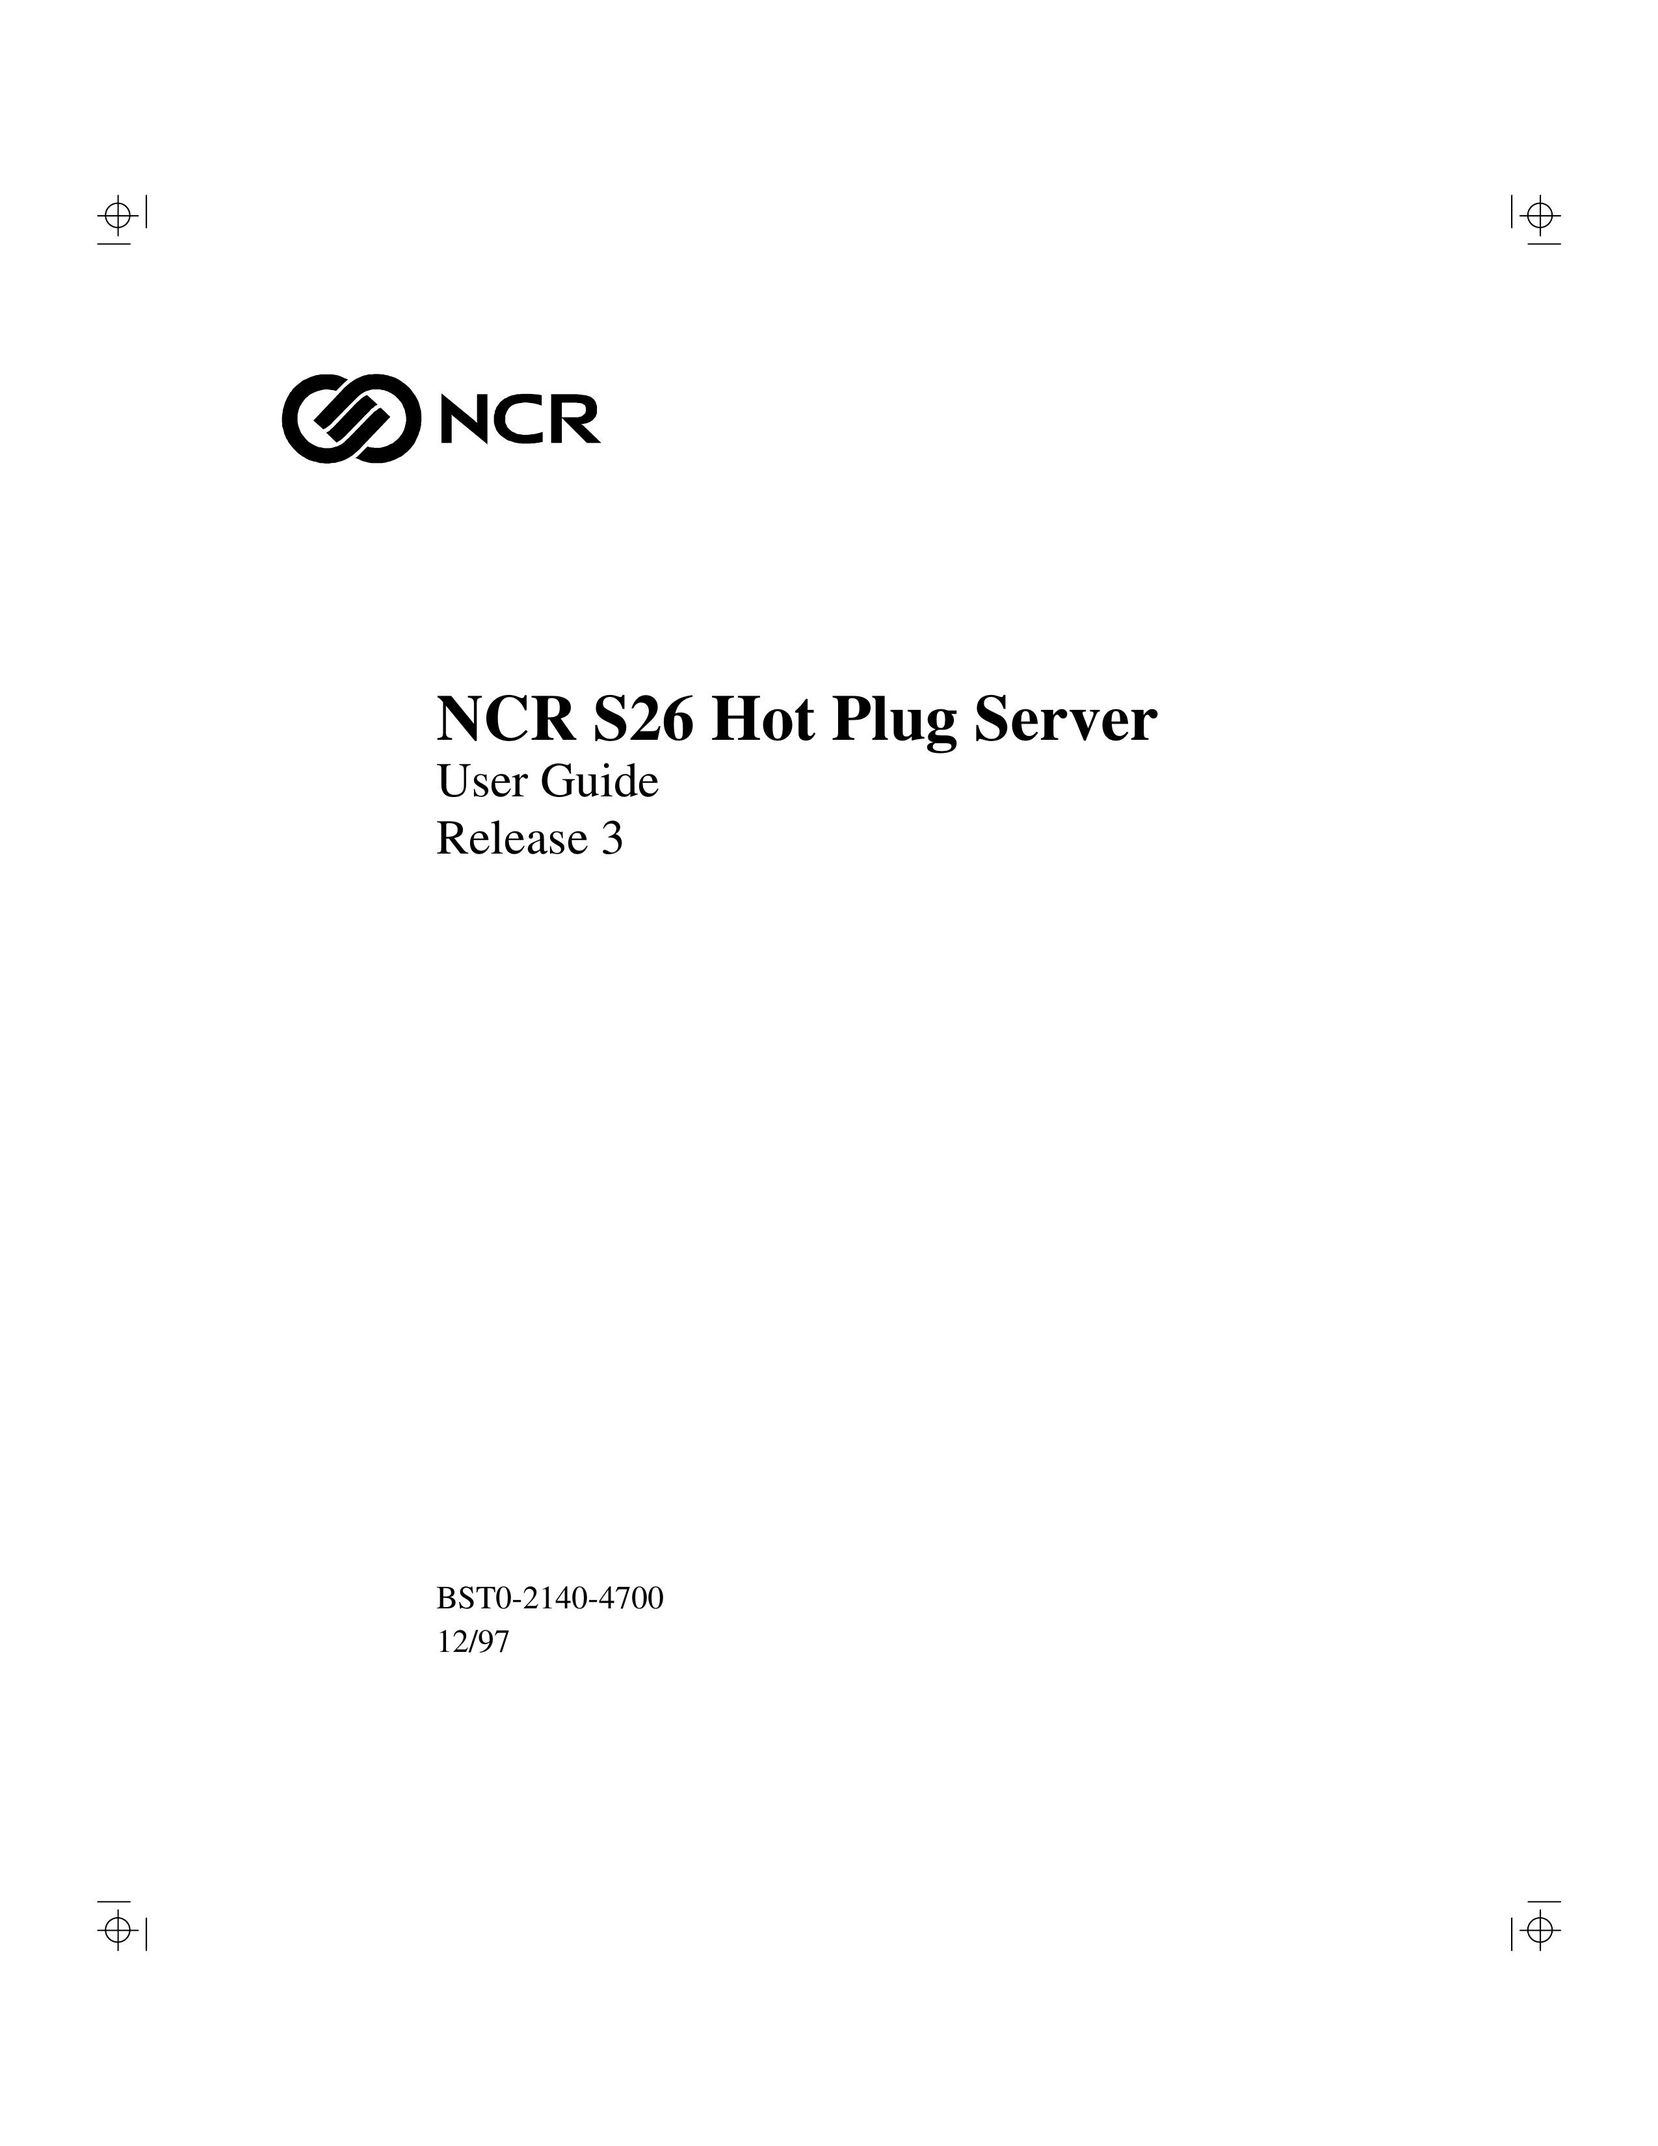 NCR S26 Server User Manual